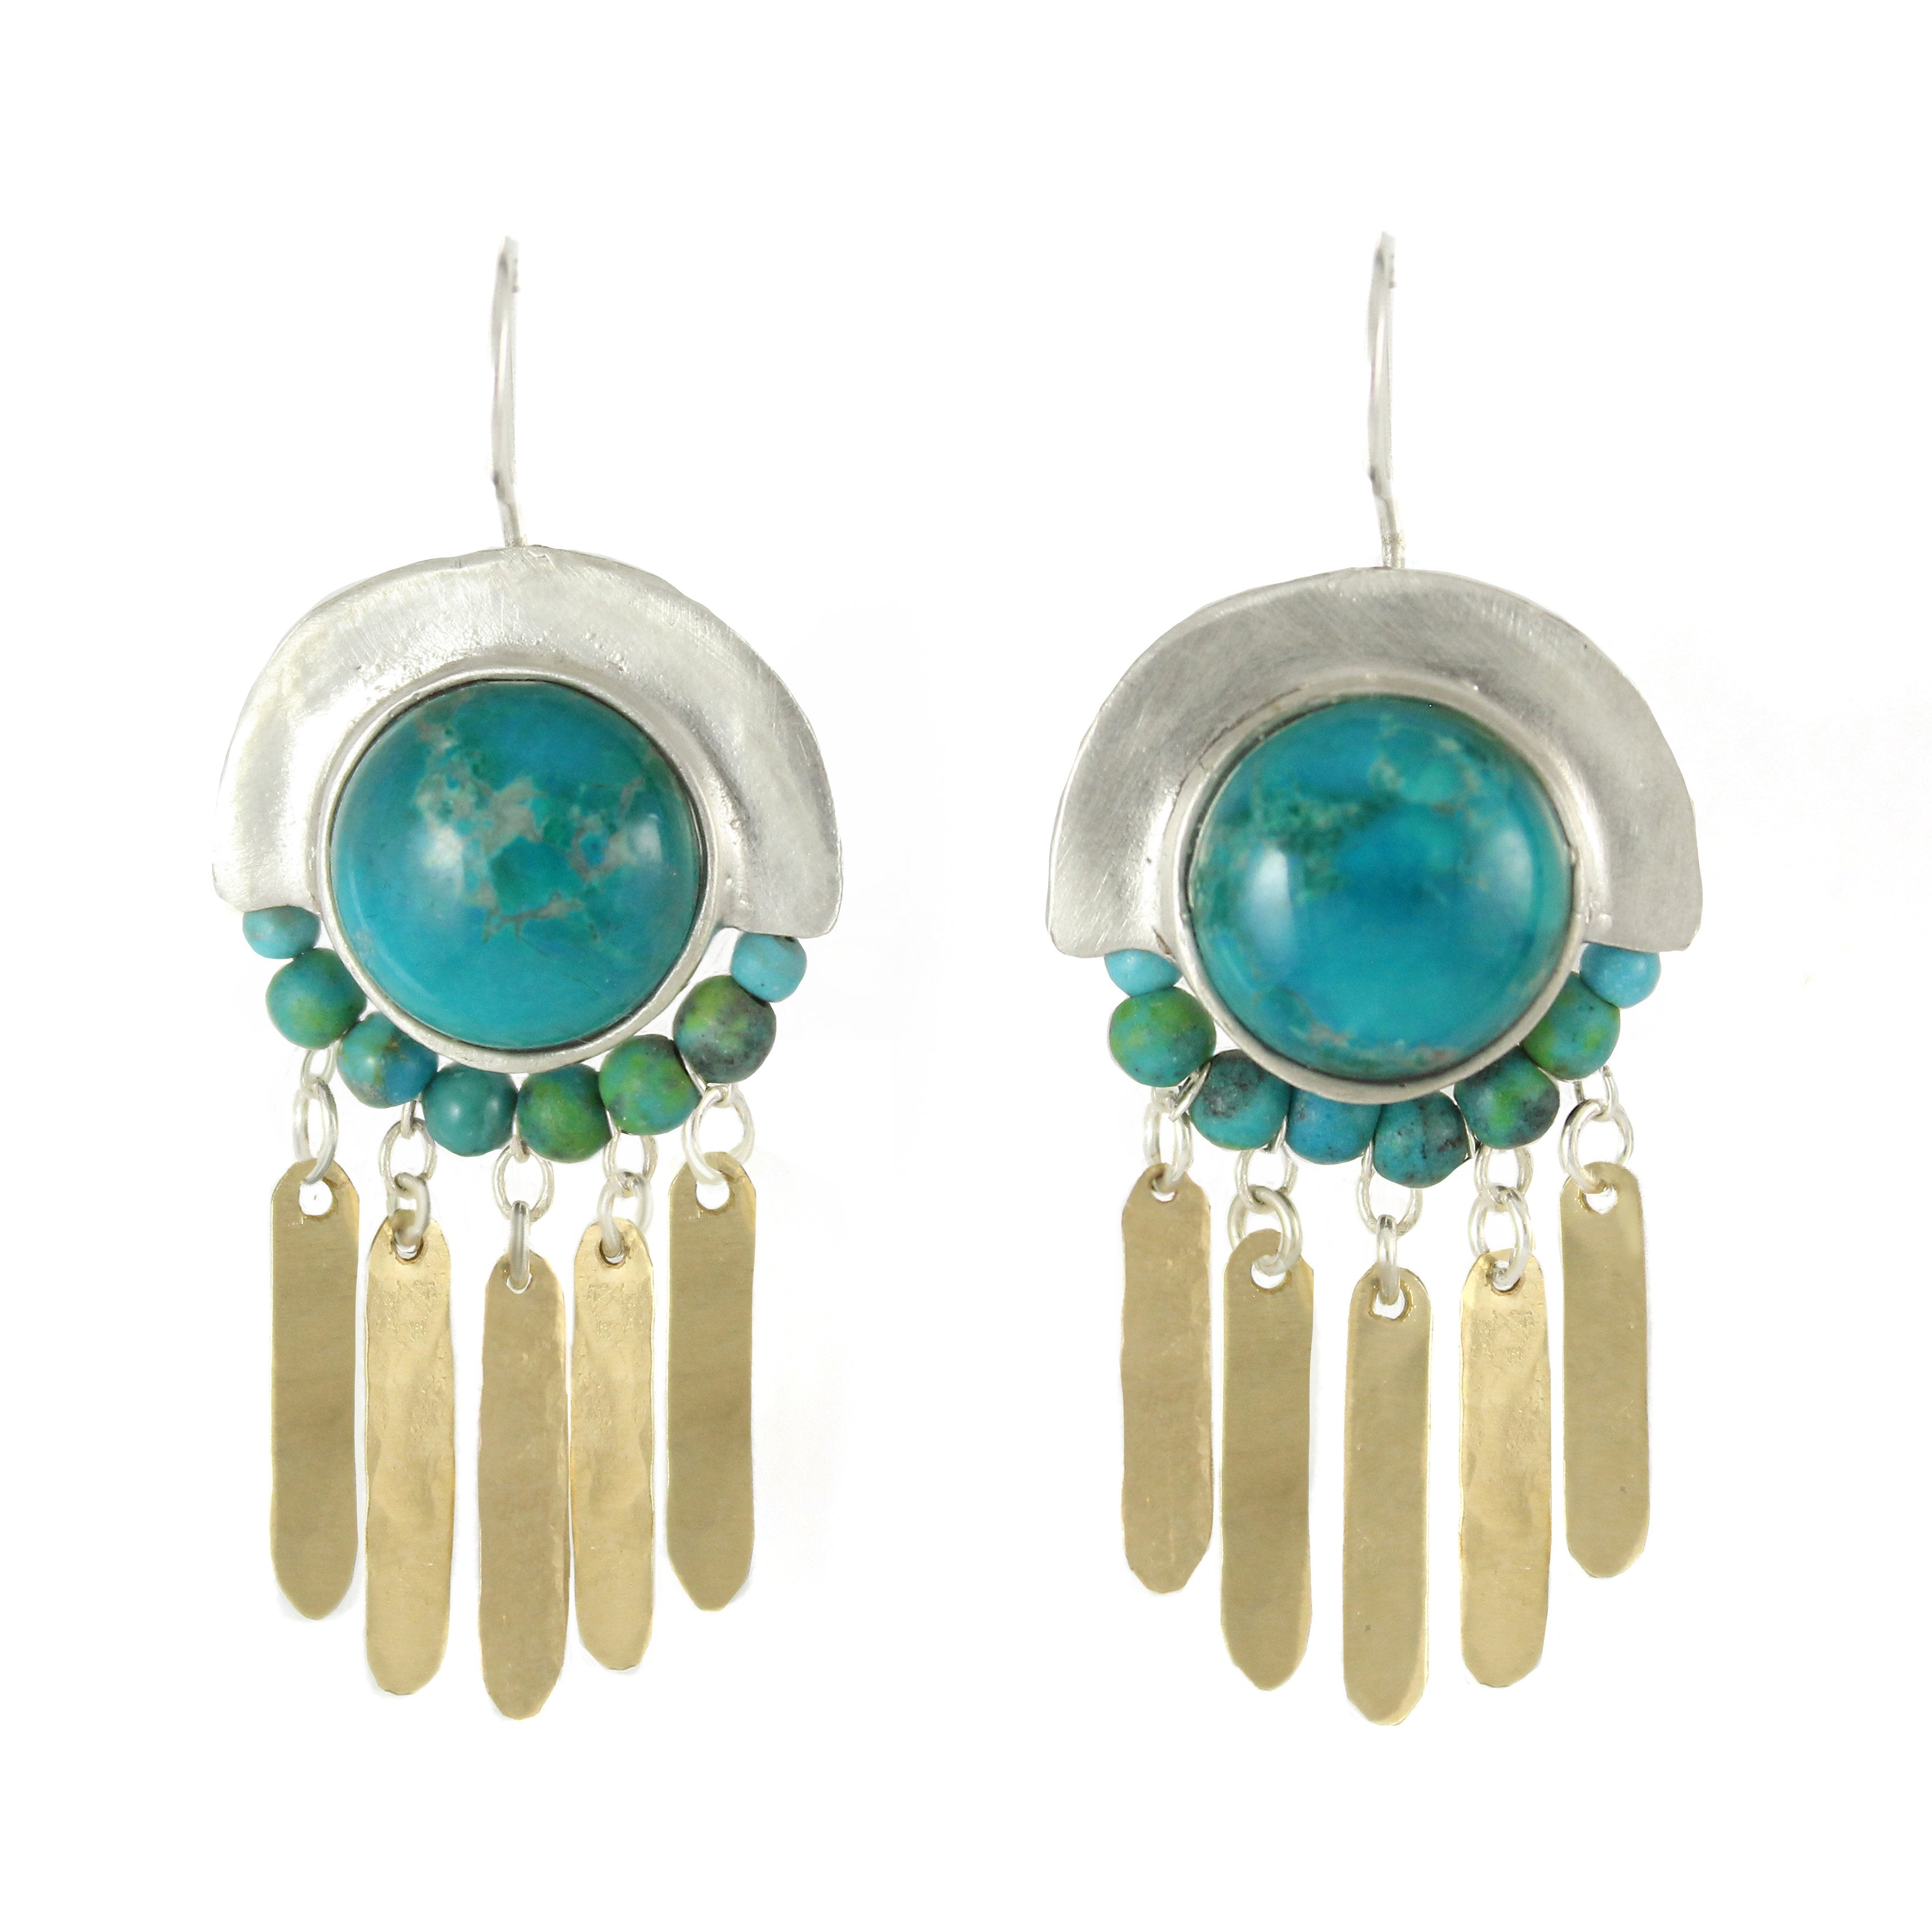 Elegant Bohemian Style Silver, Gold filled & Turquoise Gemstones Large Earrings - Shulamit Kanter